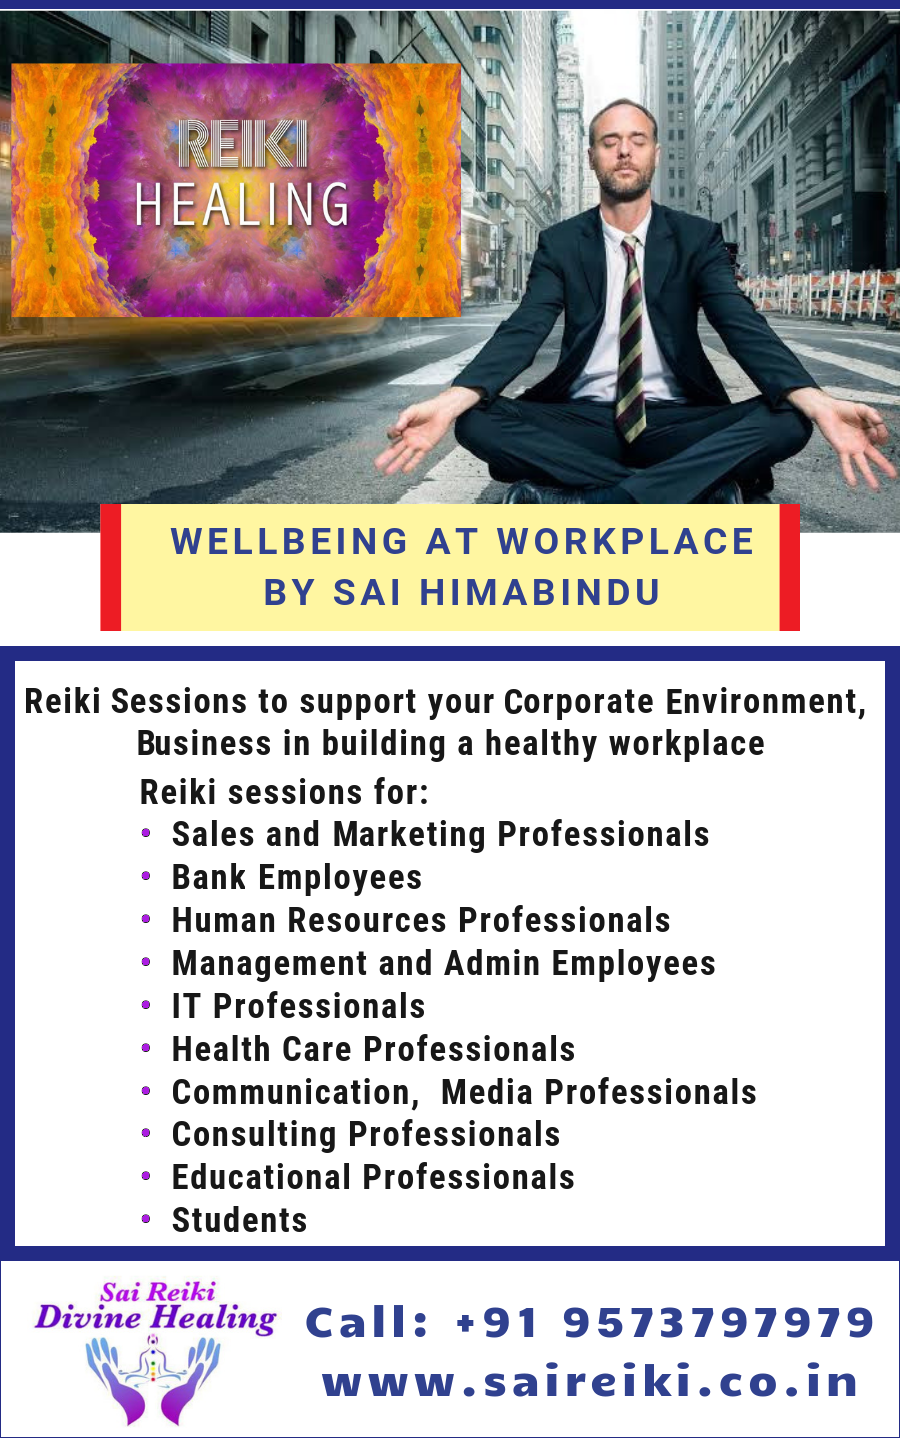 Wellbeing and Stress Management at workplace by Sai Hima Bindu - Dubai